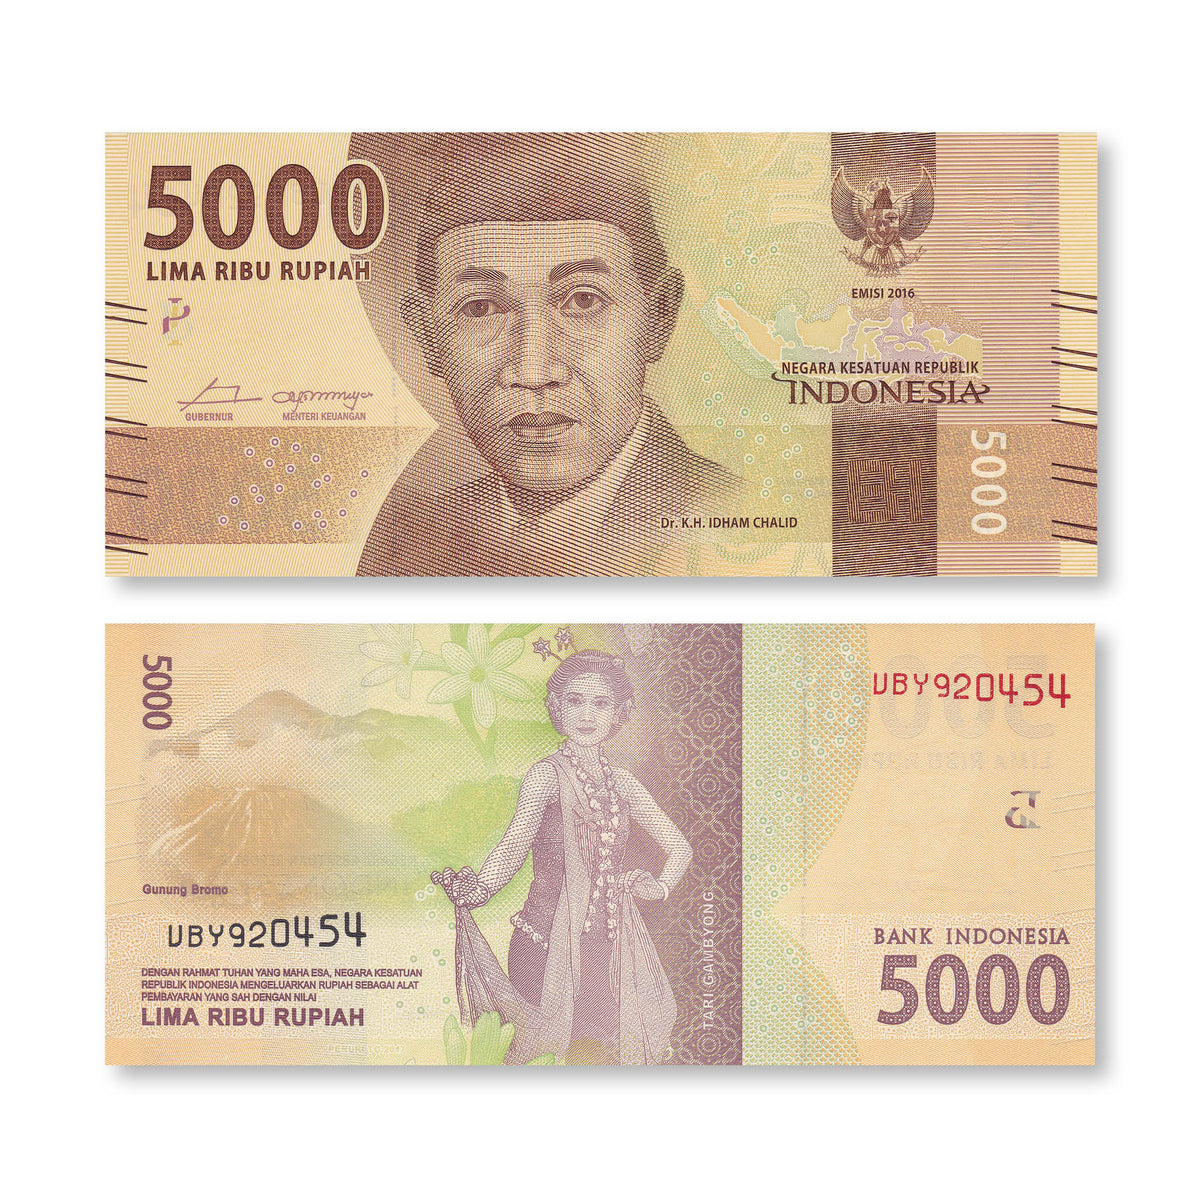 Indonesia 5000 Rupiah, 2016/2017, B611b, P156b, UNC - Robert's World Money - World Banknotes